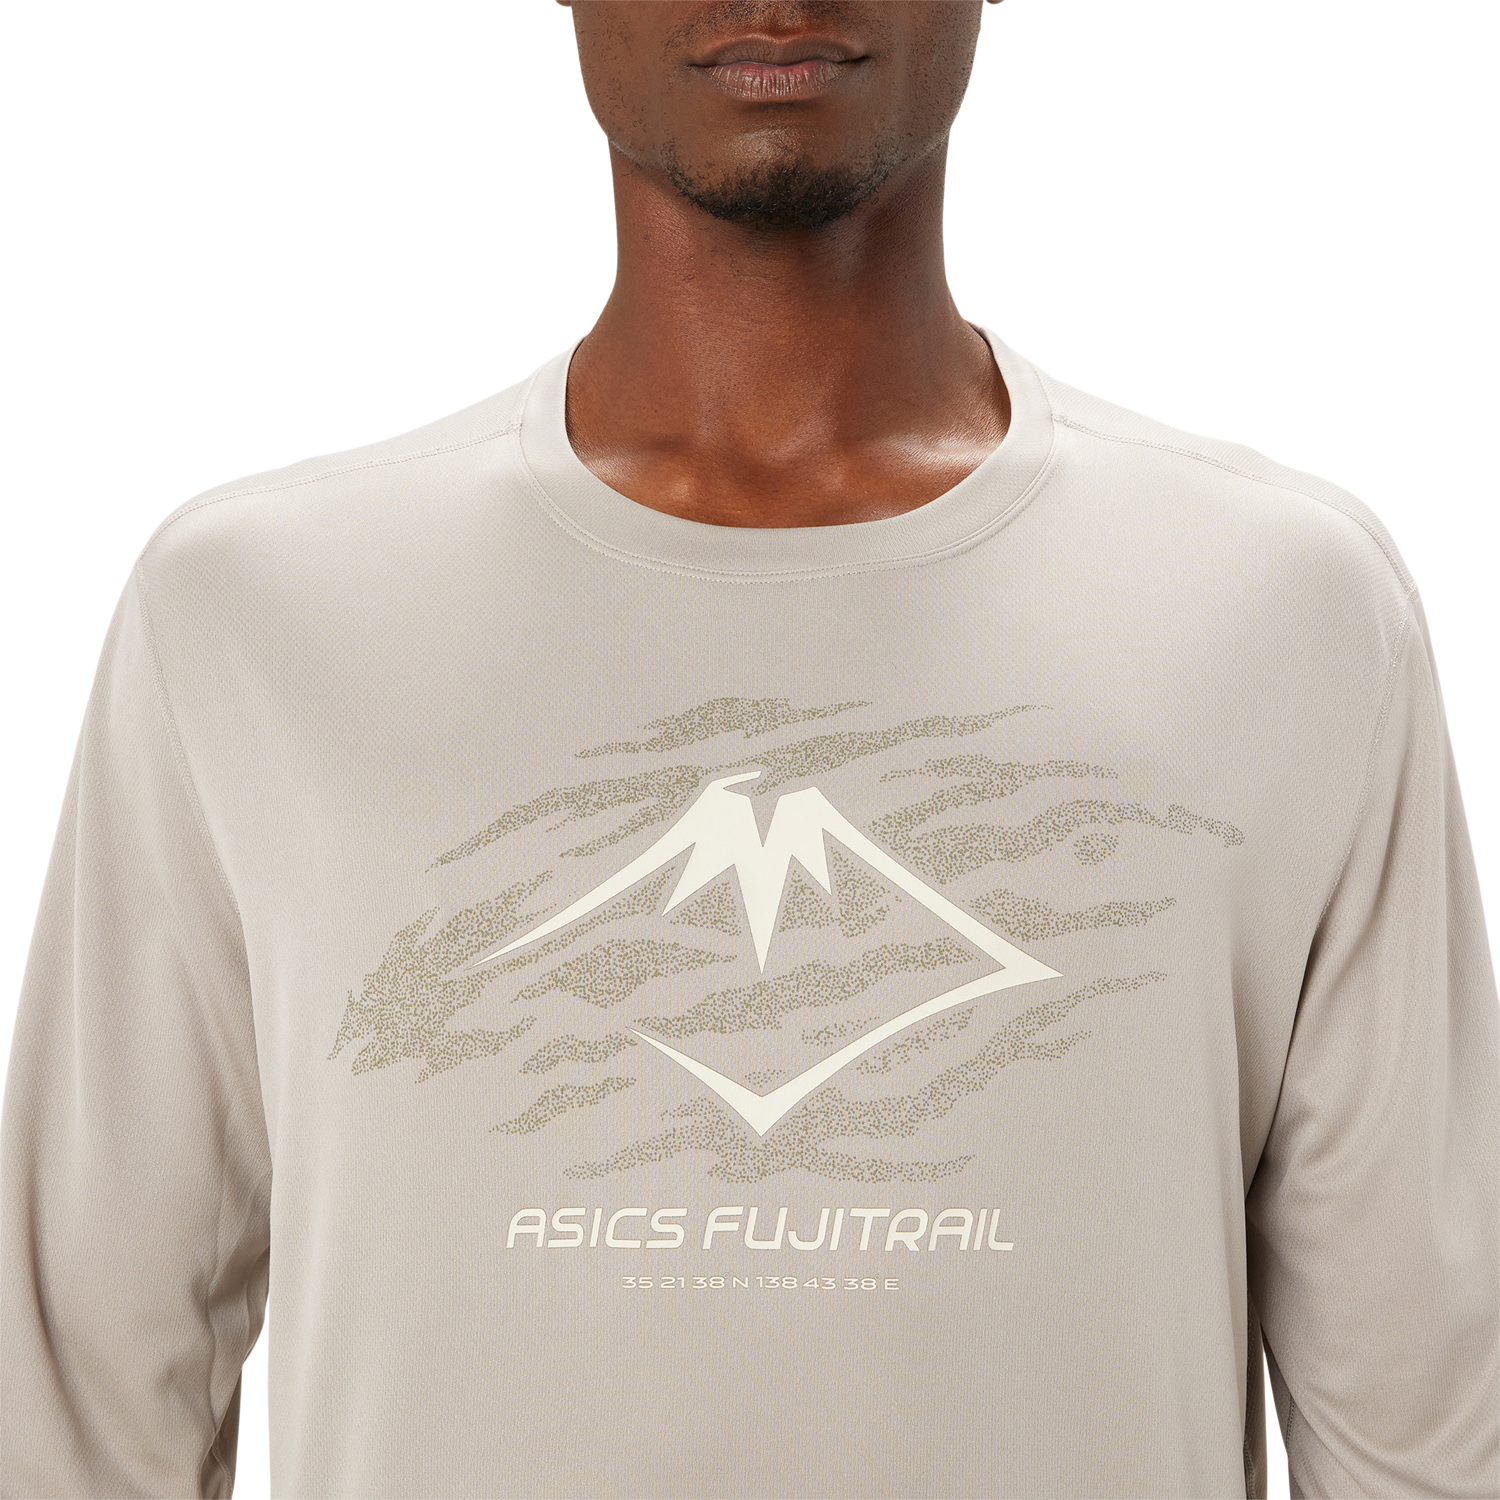 Asics Fujitrail Logo Camisa - Moonrock/Mantle Green/Oatmeal